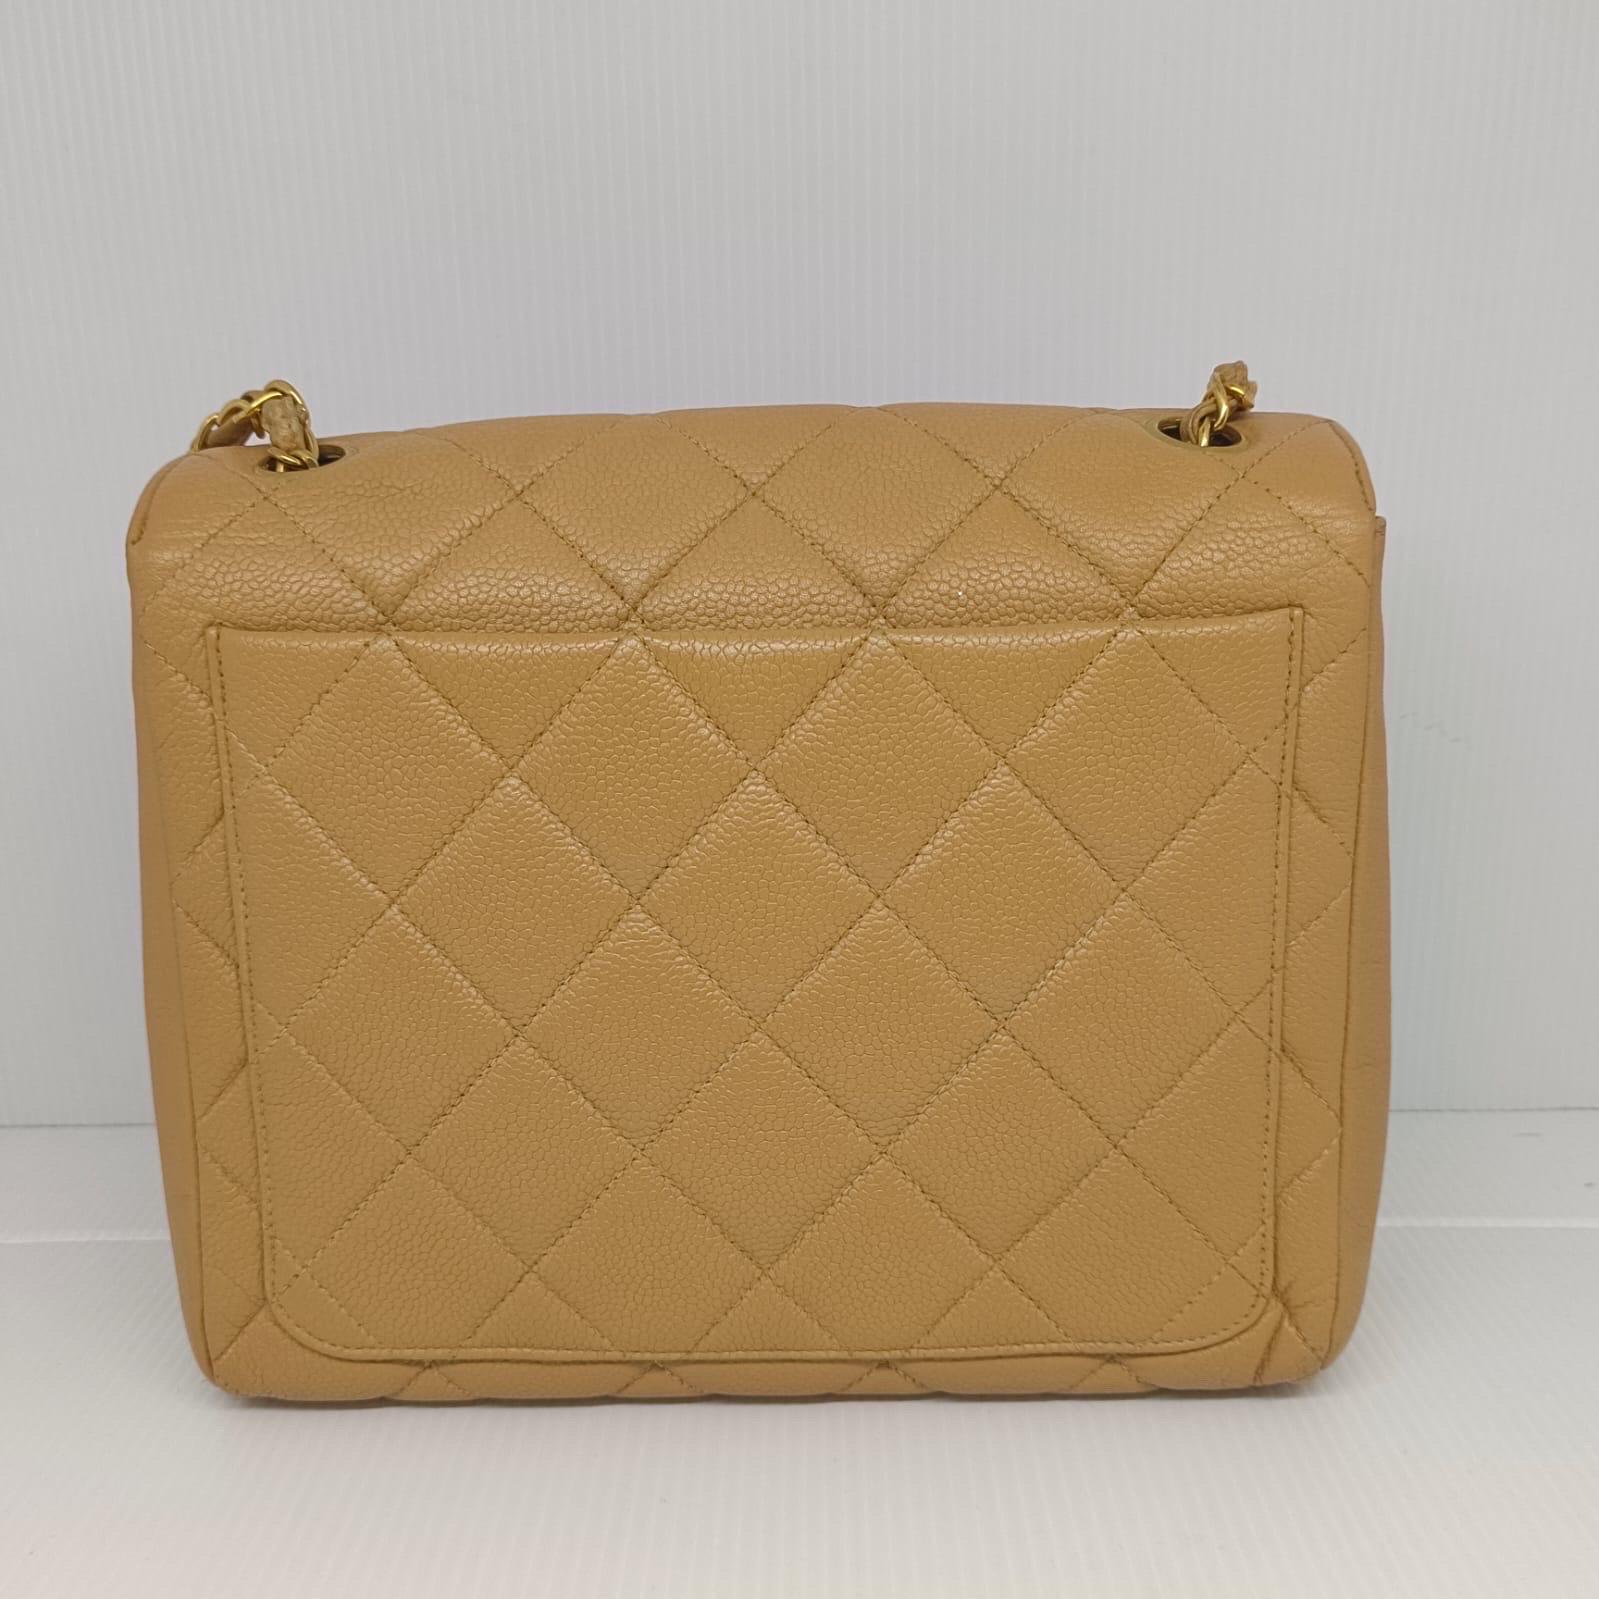 1990s Vintage Chanel Beige Caviar Leather Flap Bag For Sale 1